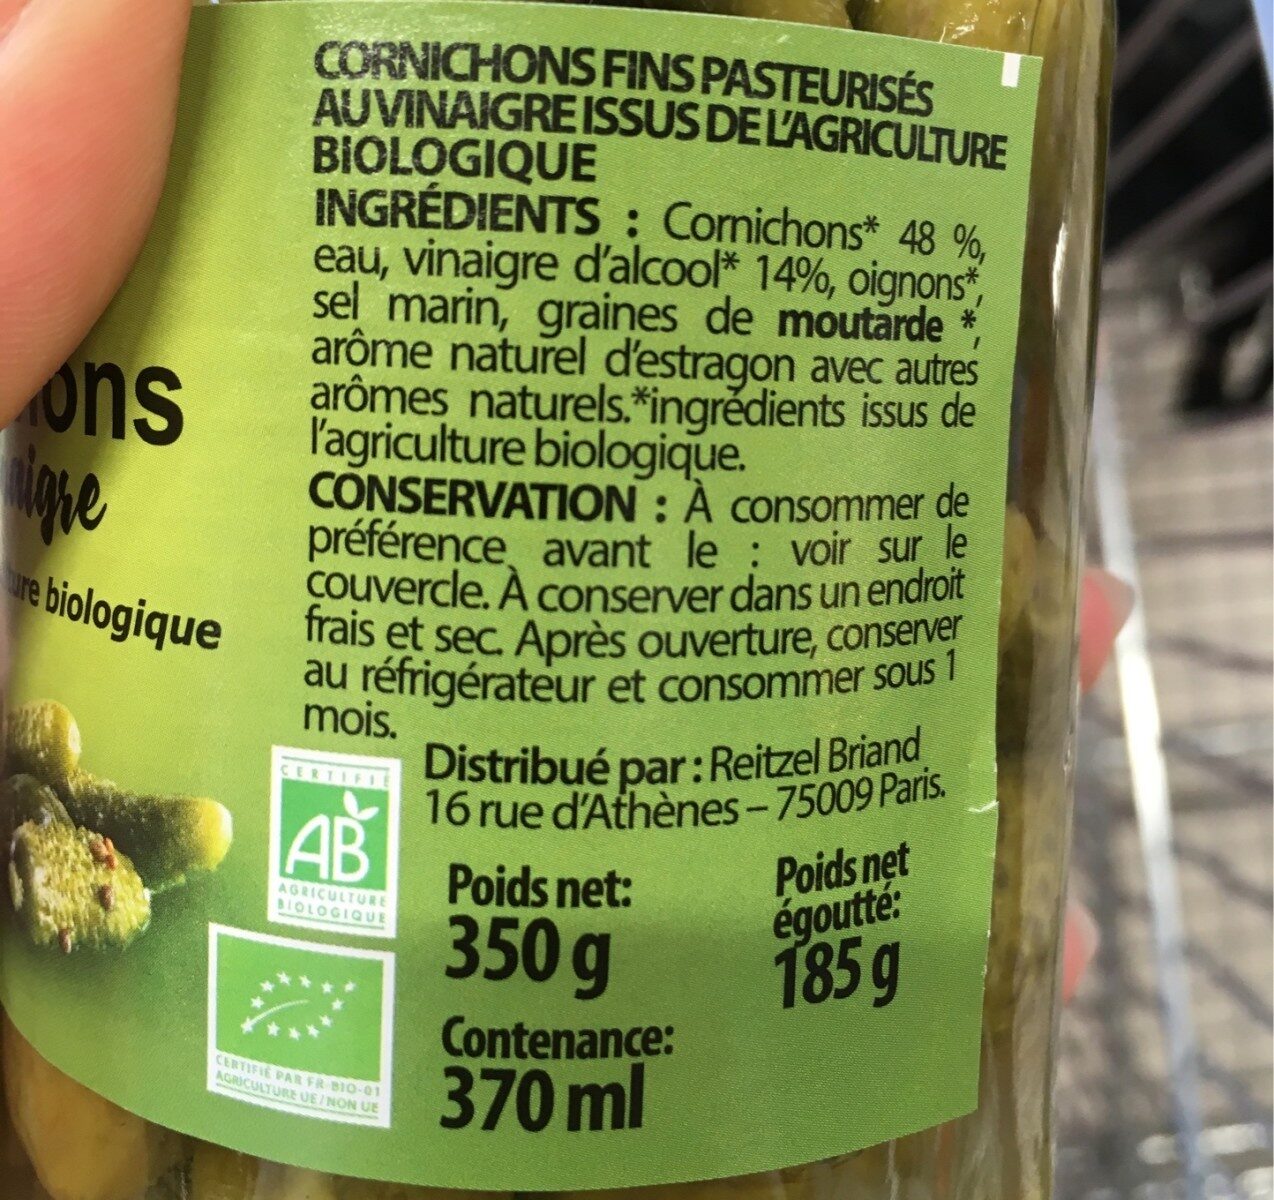 Cornichons au vinaigre - Ingredients - fr